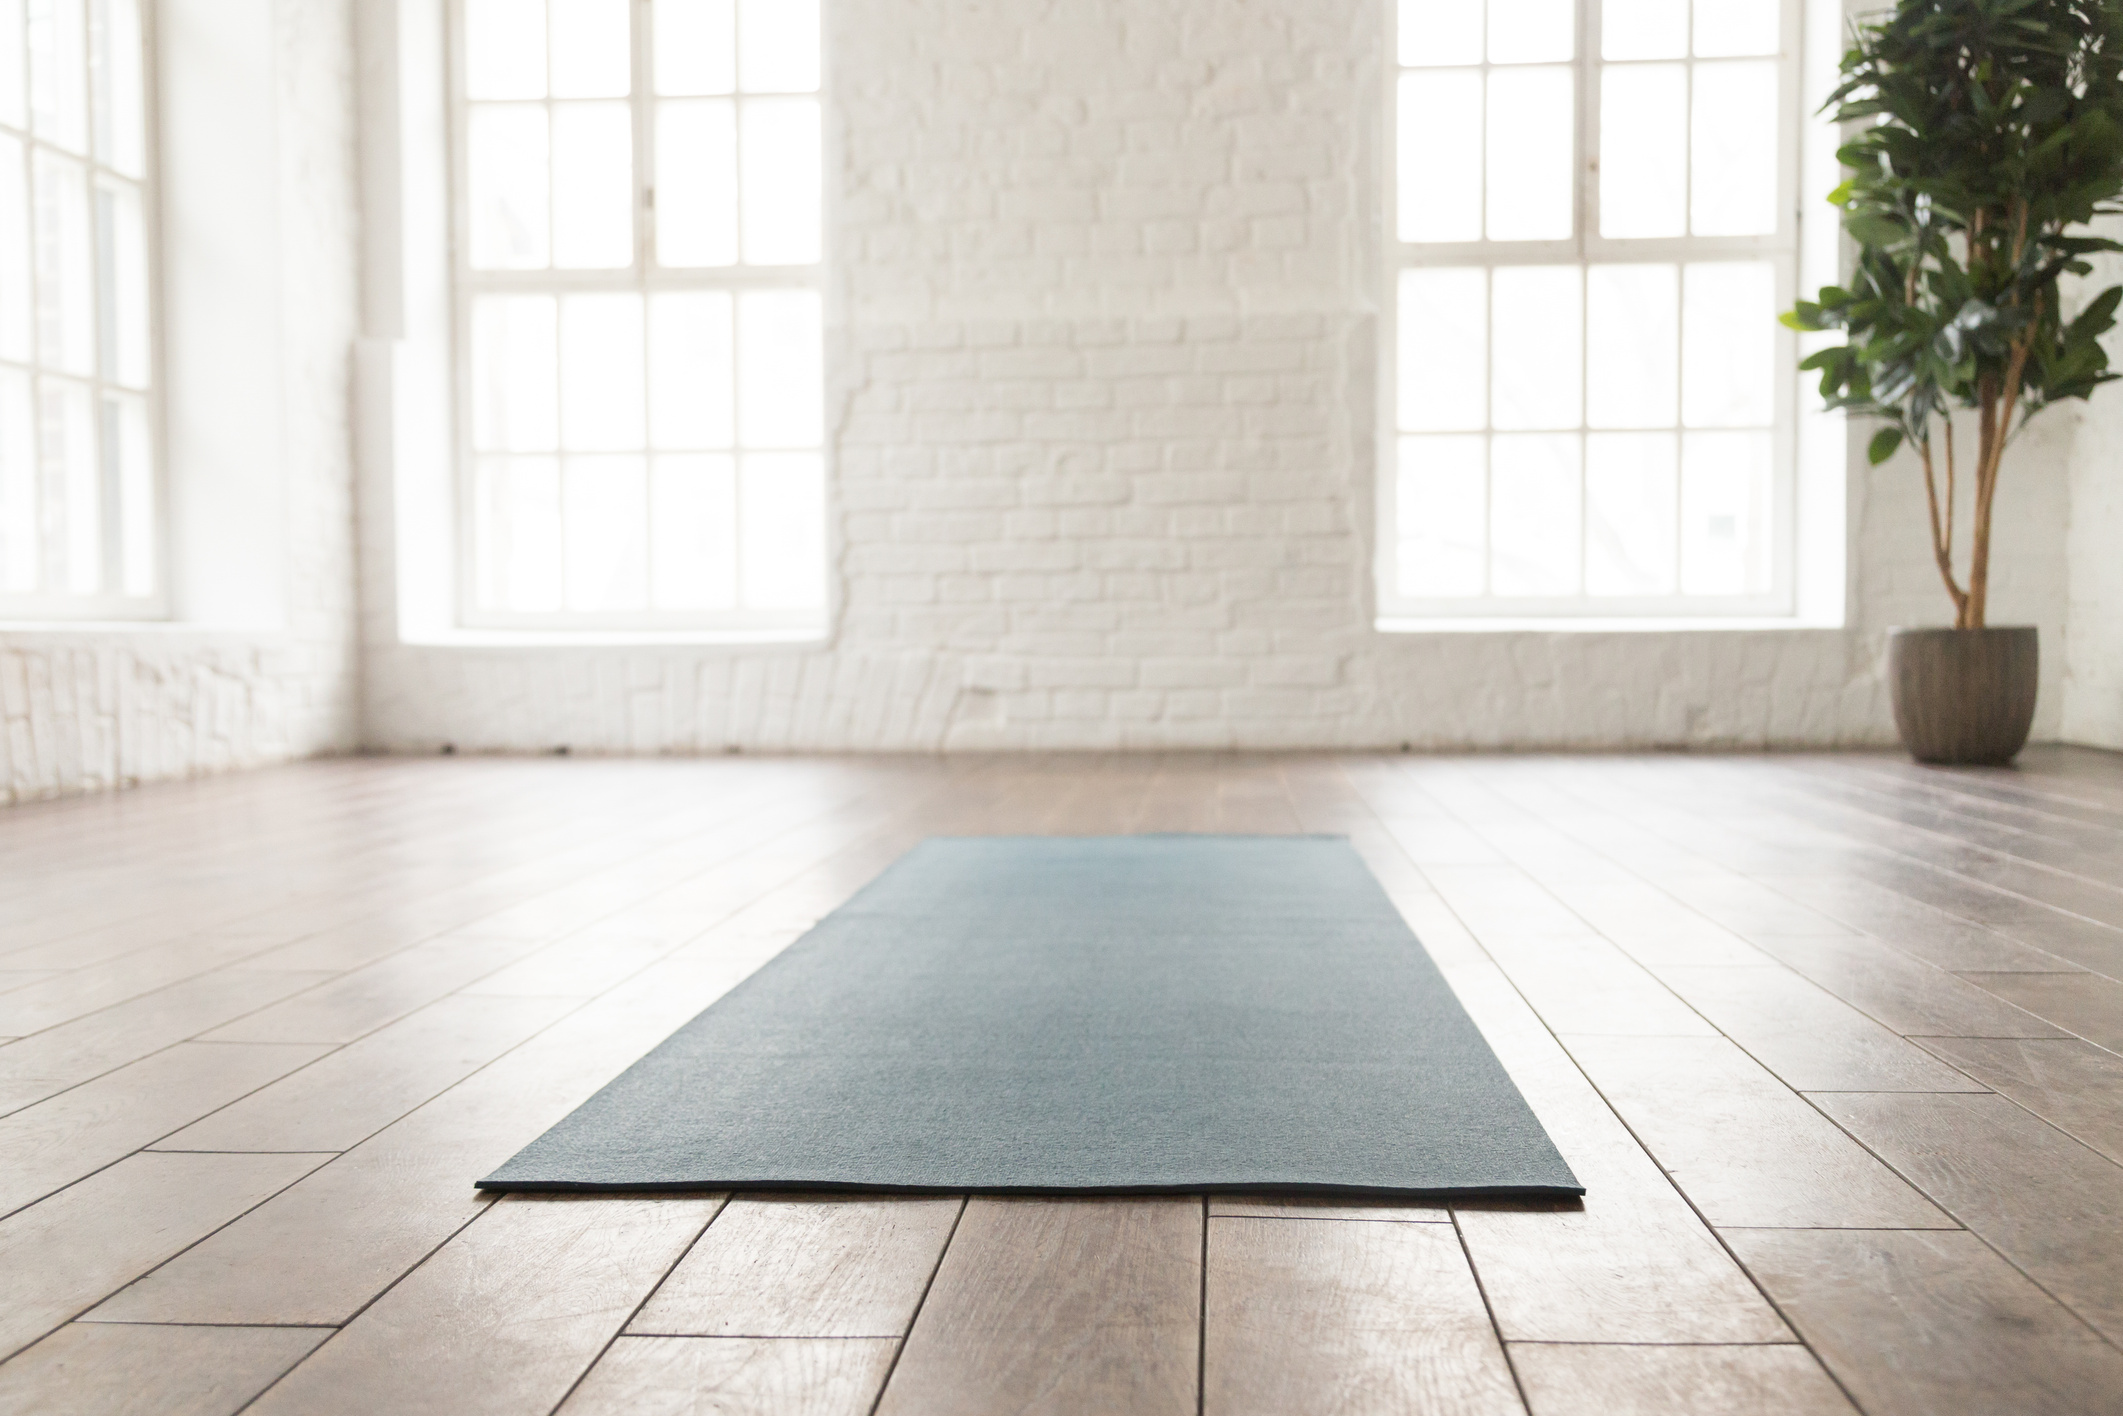 Empty room in yoga studio, unrolled yoga mat on floor